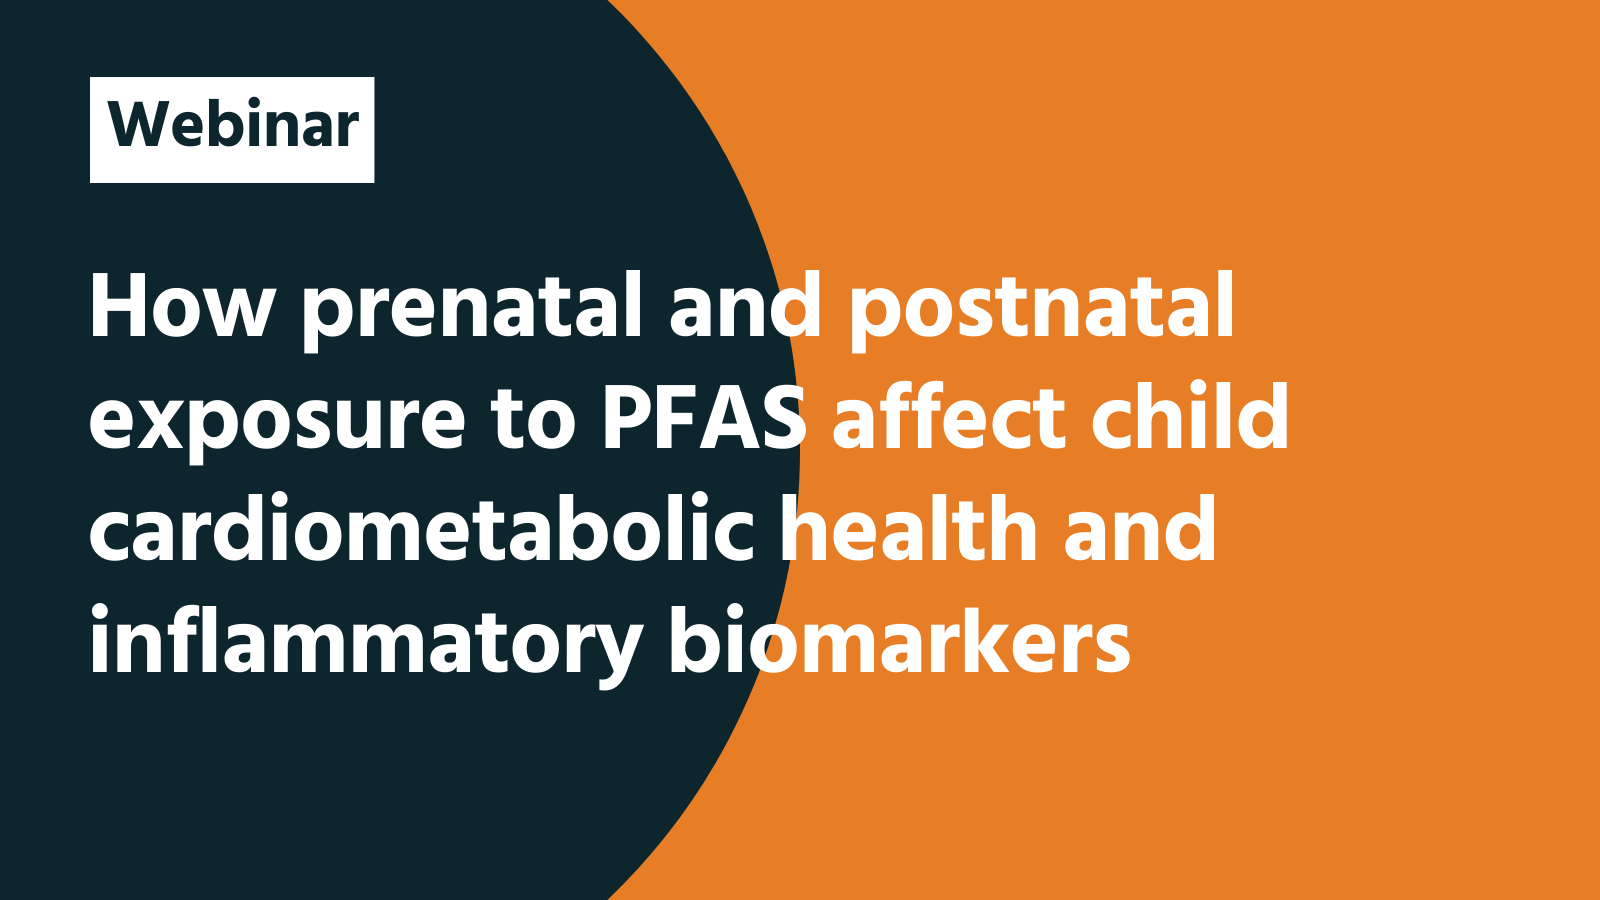 Webinar: How prenatal and postnatal exposure to PFAS affect child cardiometabolic health and inflammatory biomarkers